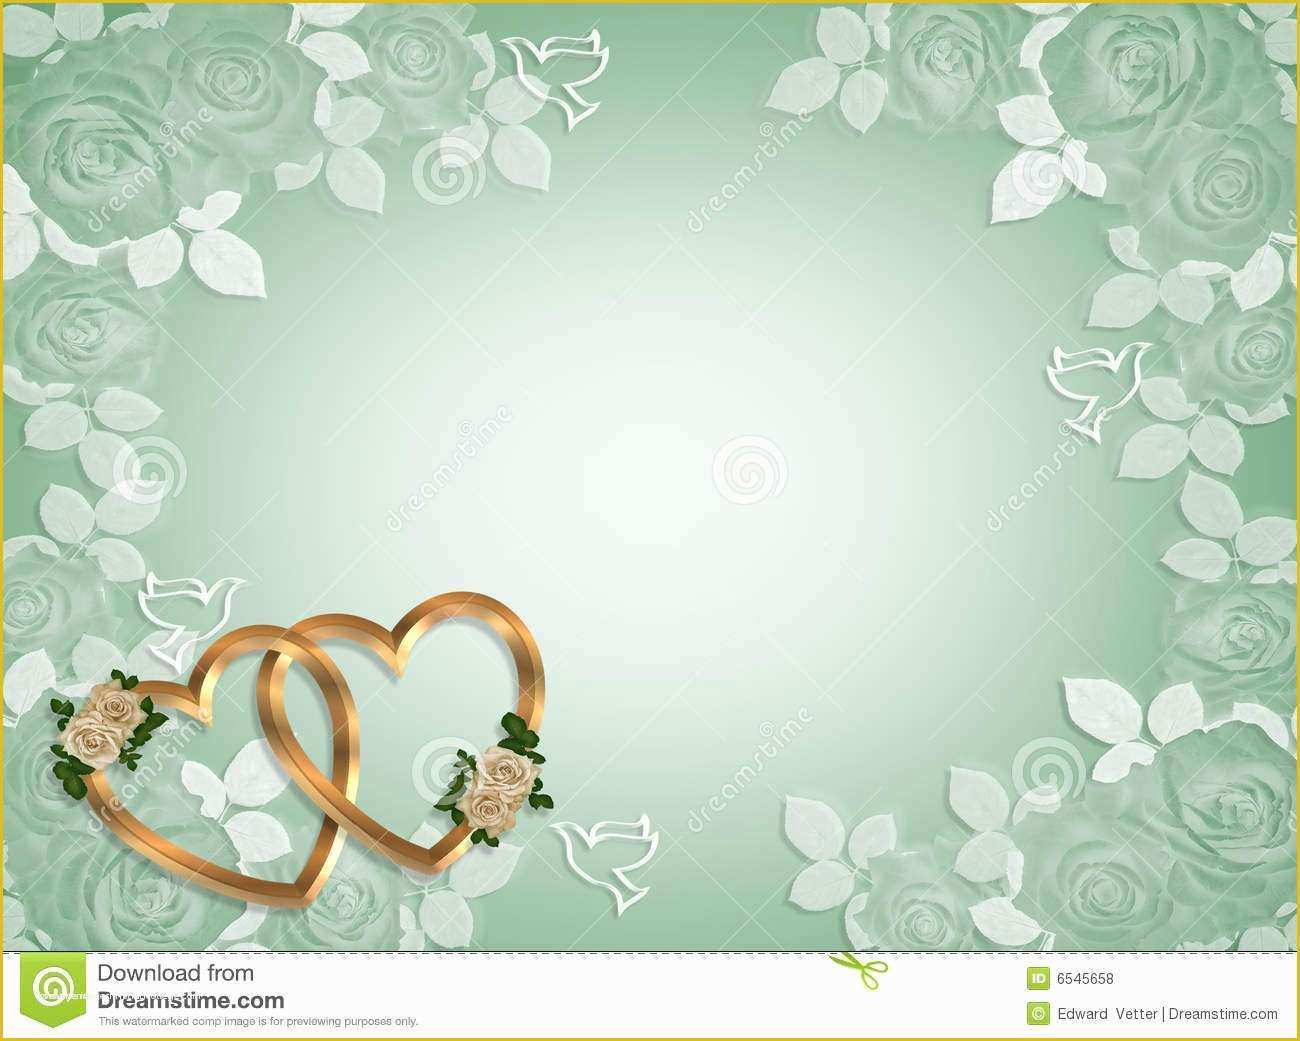 Engagement Invitation Templates Free Download Of Wedding Invitation Background Designs Free Luxury